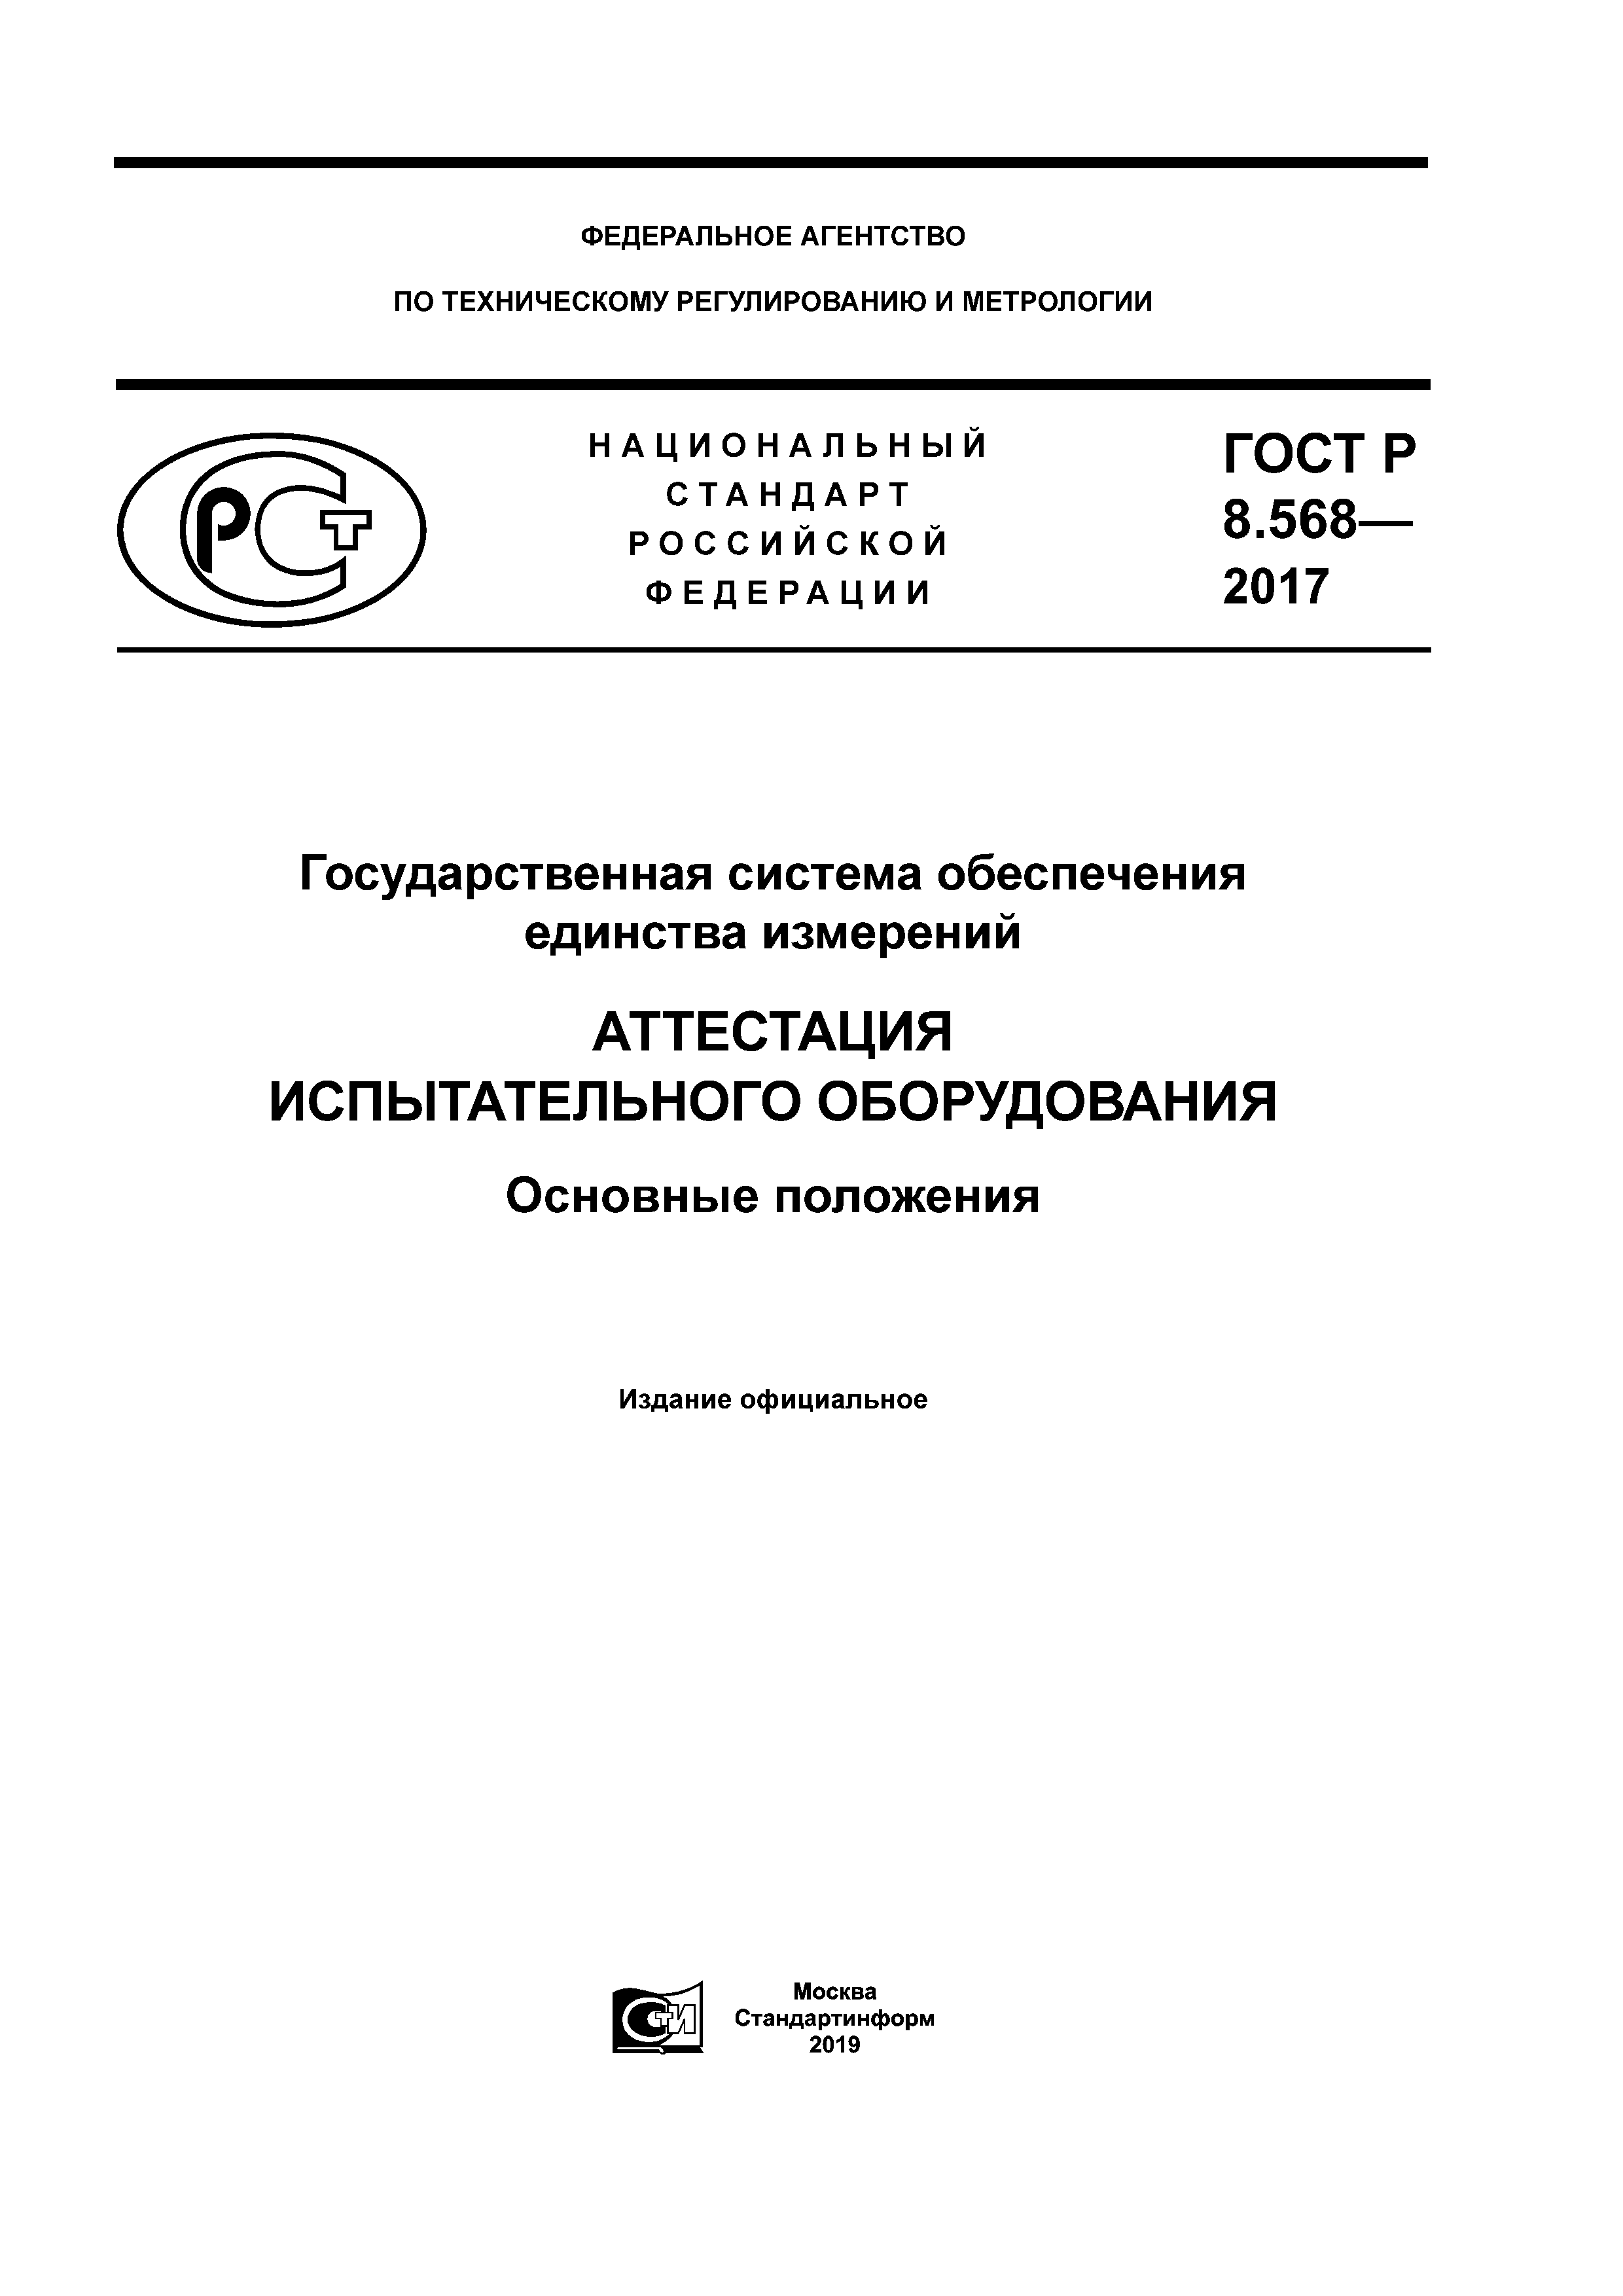 ГОСТ Р 8.568-2017